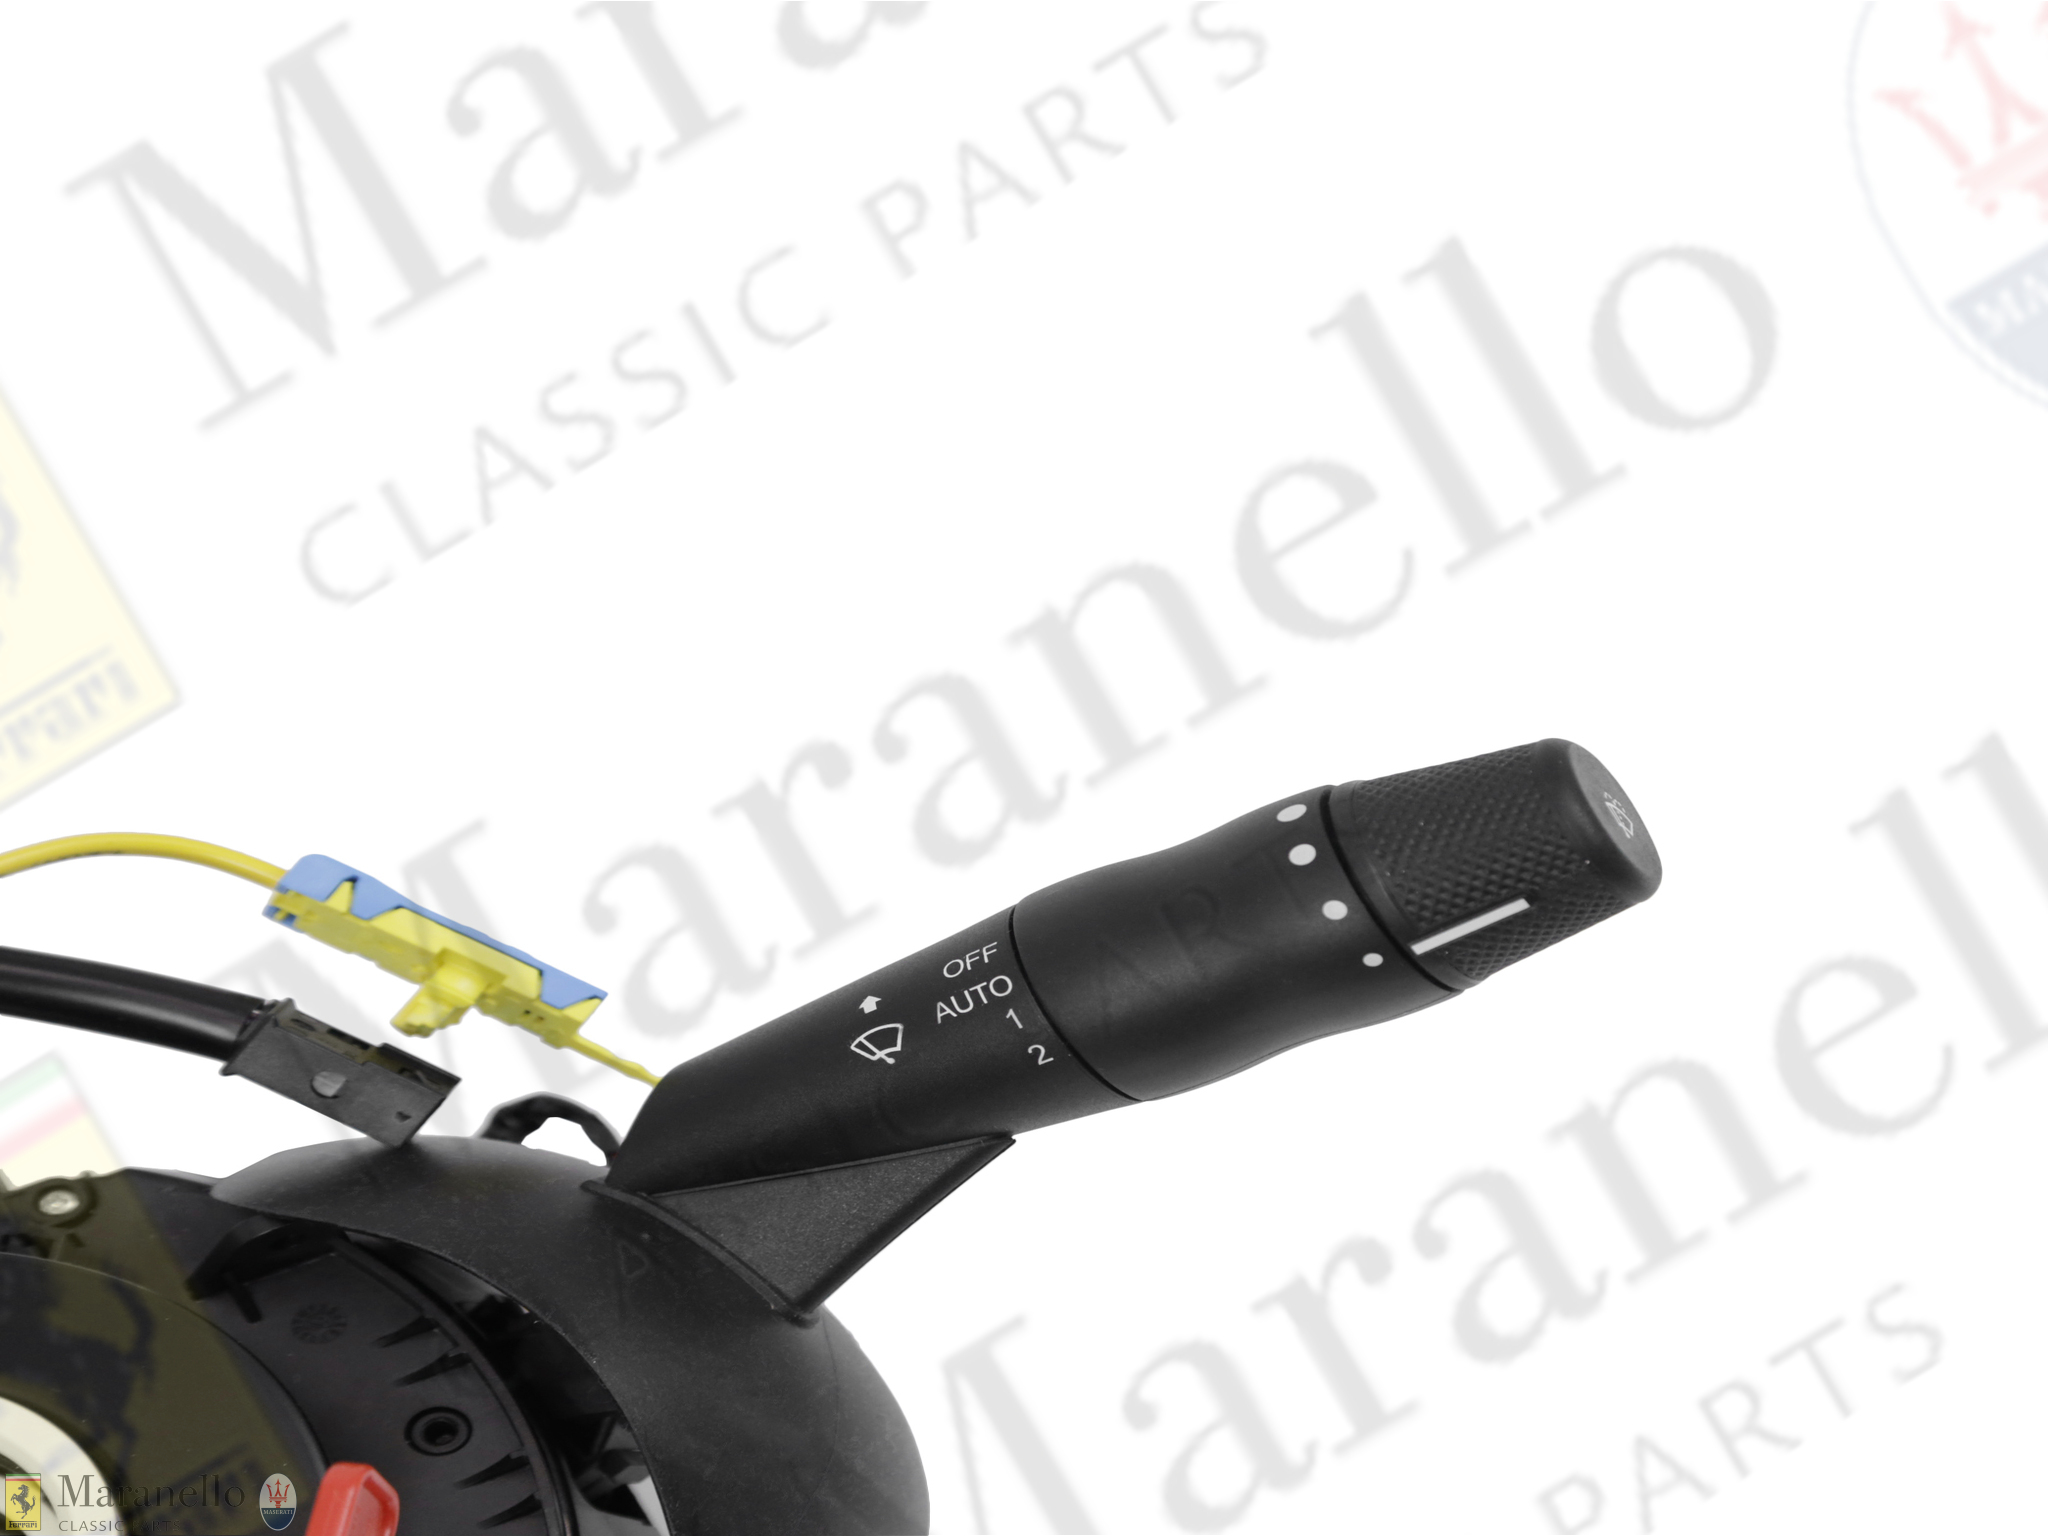 Maserati part 281701 - Steering Column Stalk | Maranello Classic Parts